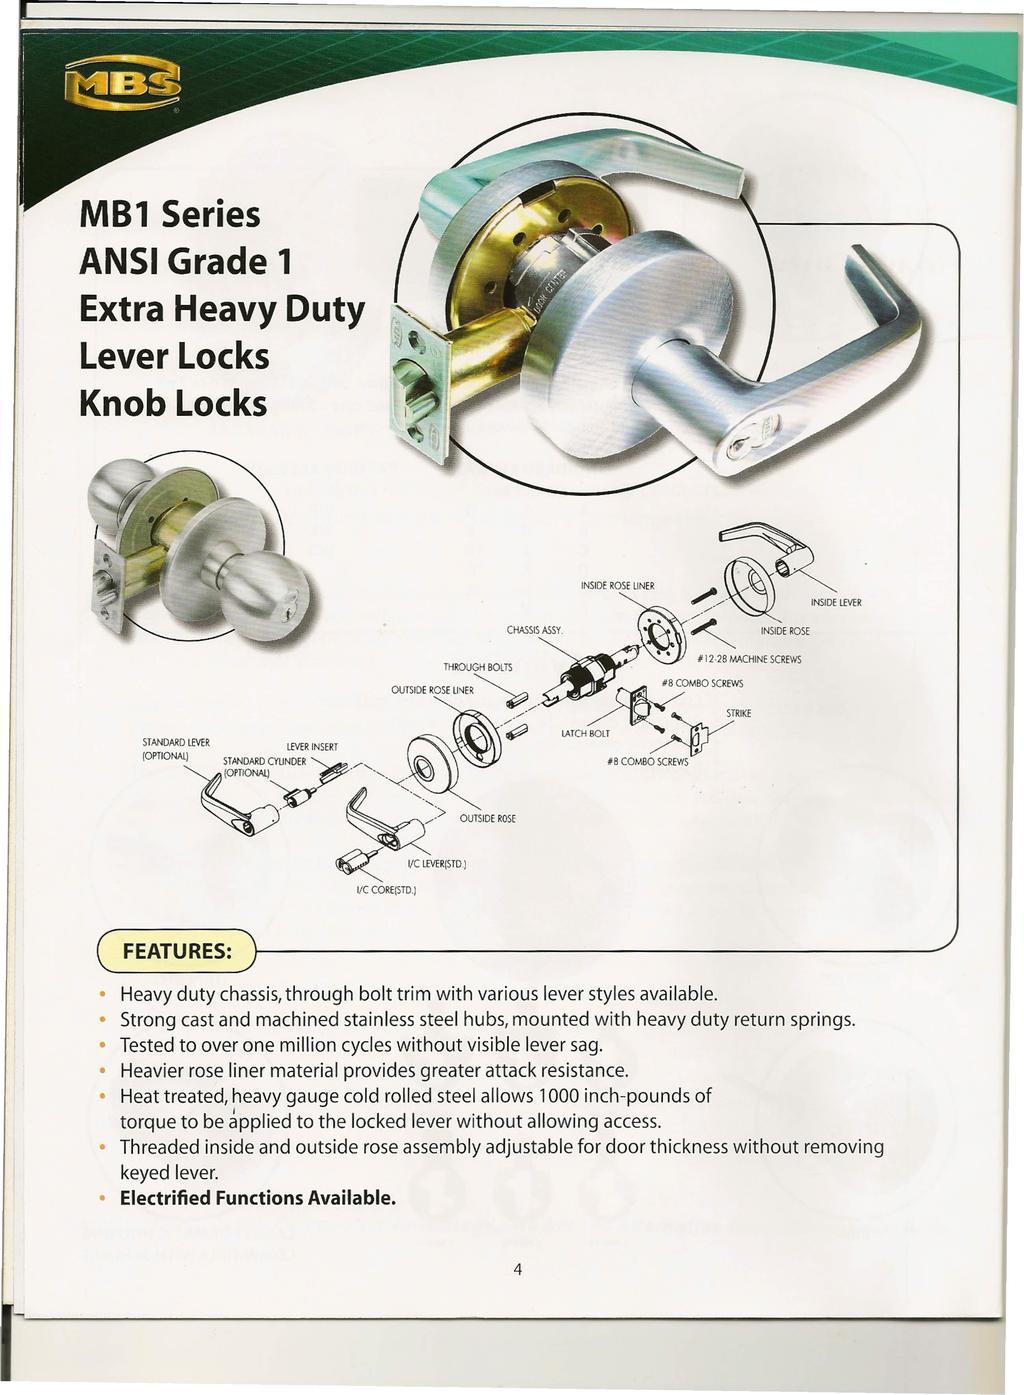 MBl Series ANSI Grade 1 Extra Heavy Duty Lever Locks Knob Locks,.."""'"'",, '/-~.A~ INSIDElEVtR CHASSIS ASSY.